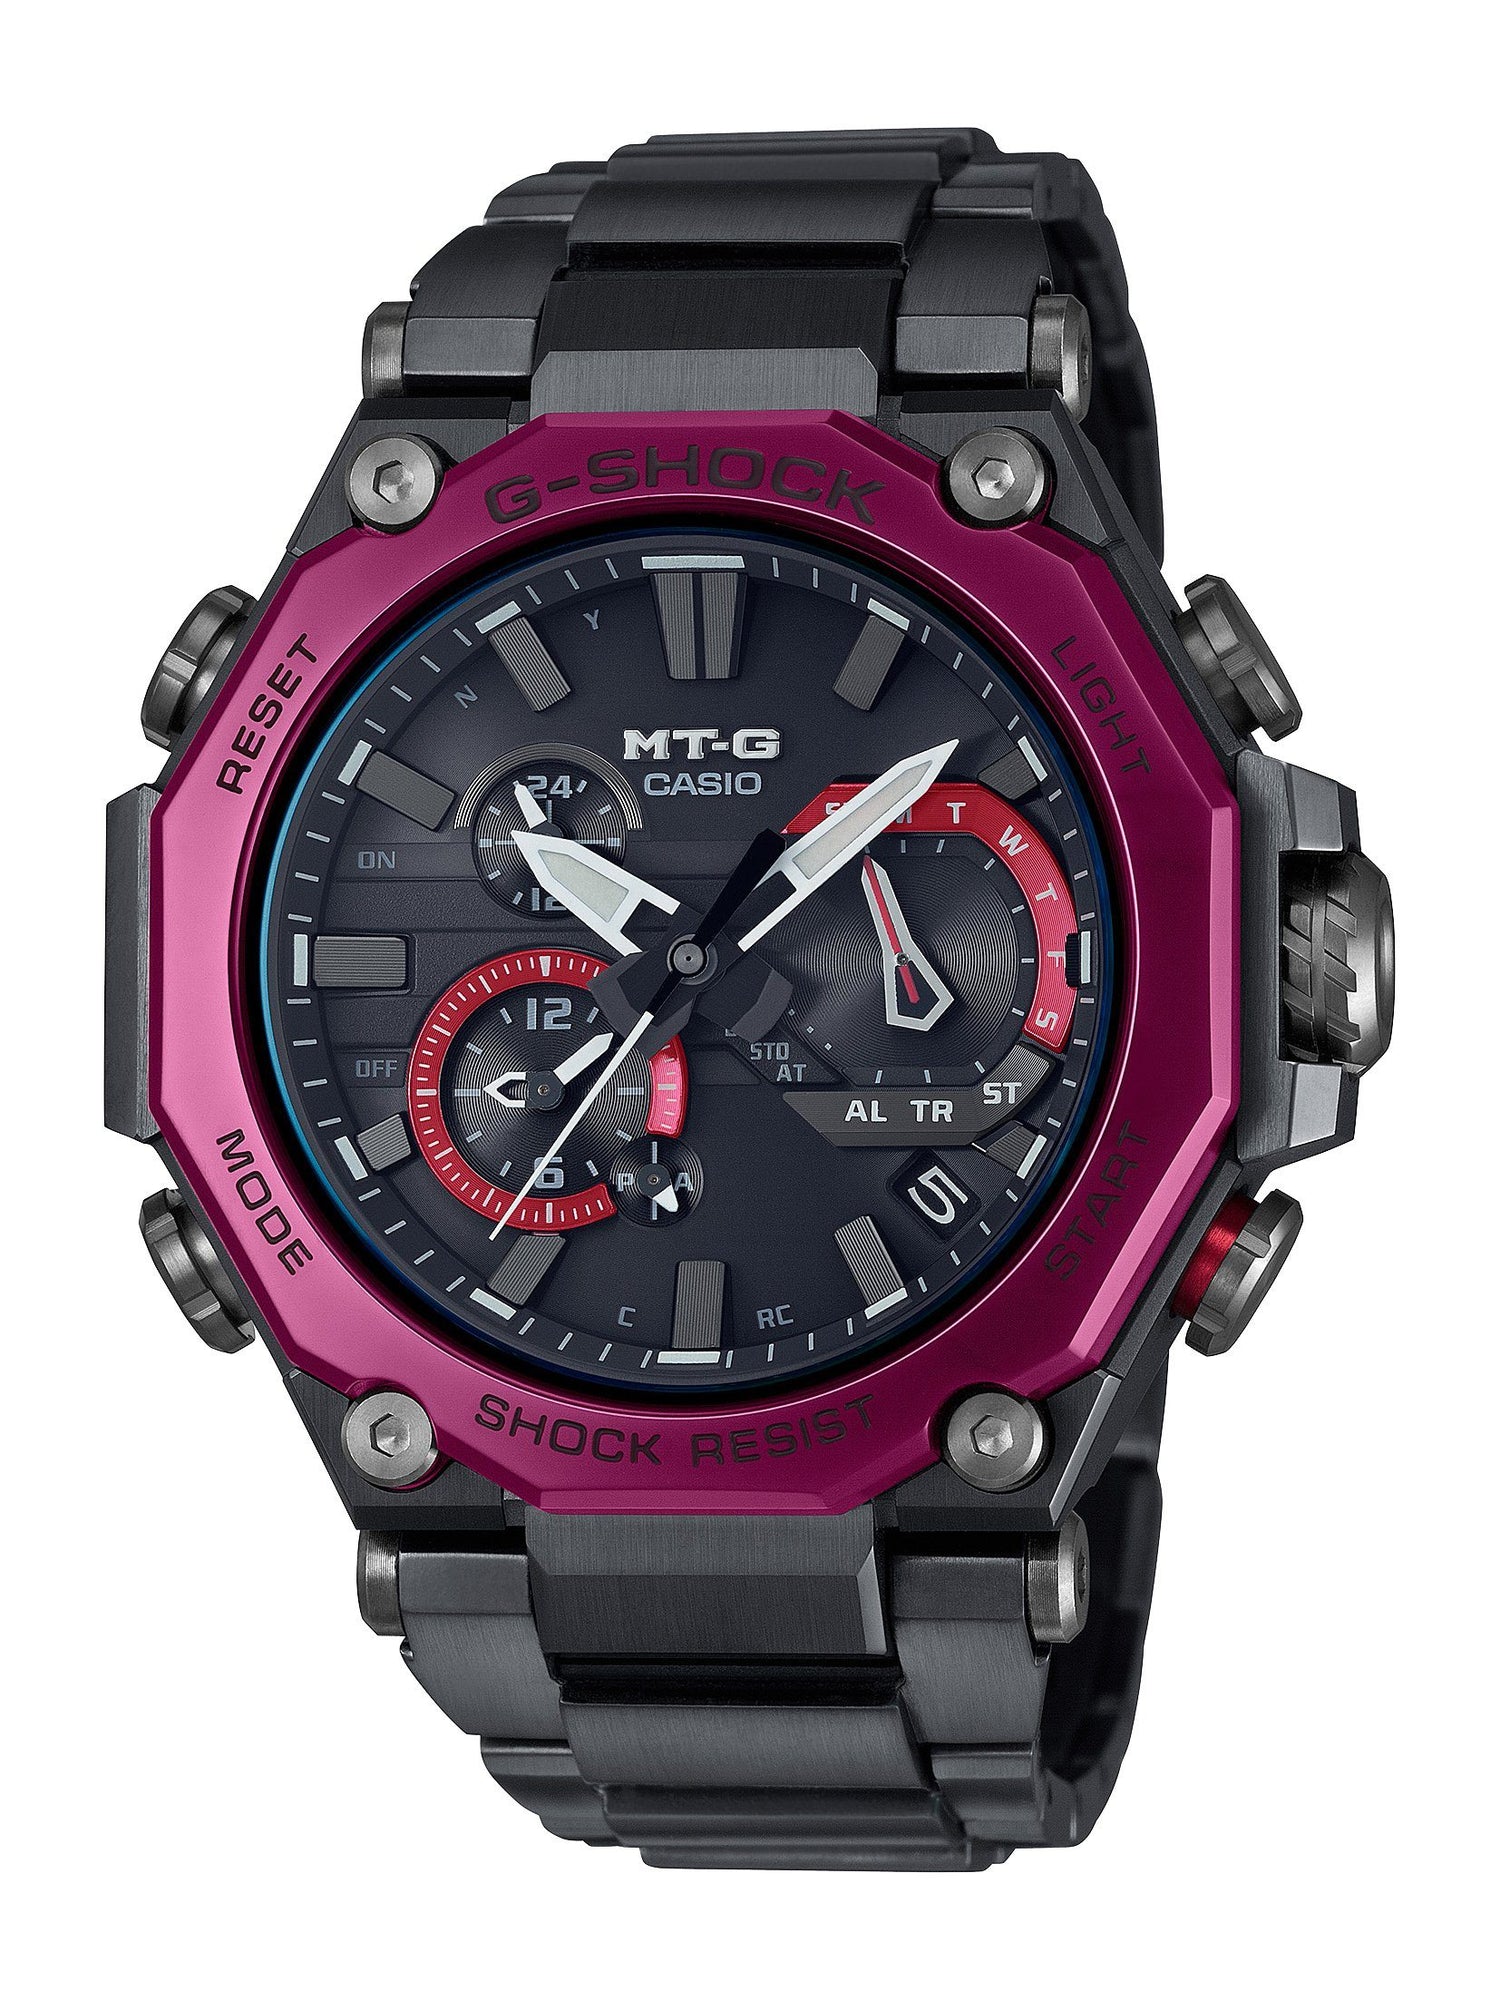 Casio G Shock MTG Black and Purple Watch MTG-B2000B-1A4DR Watches Casio 